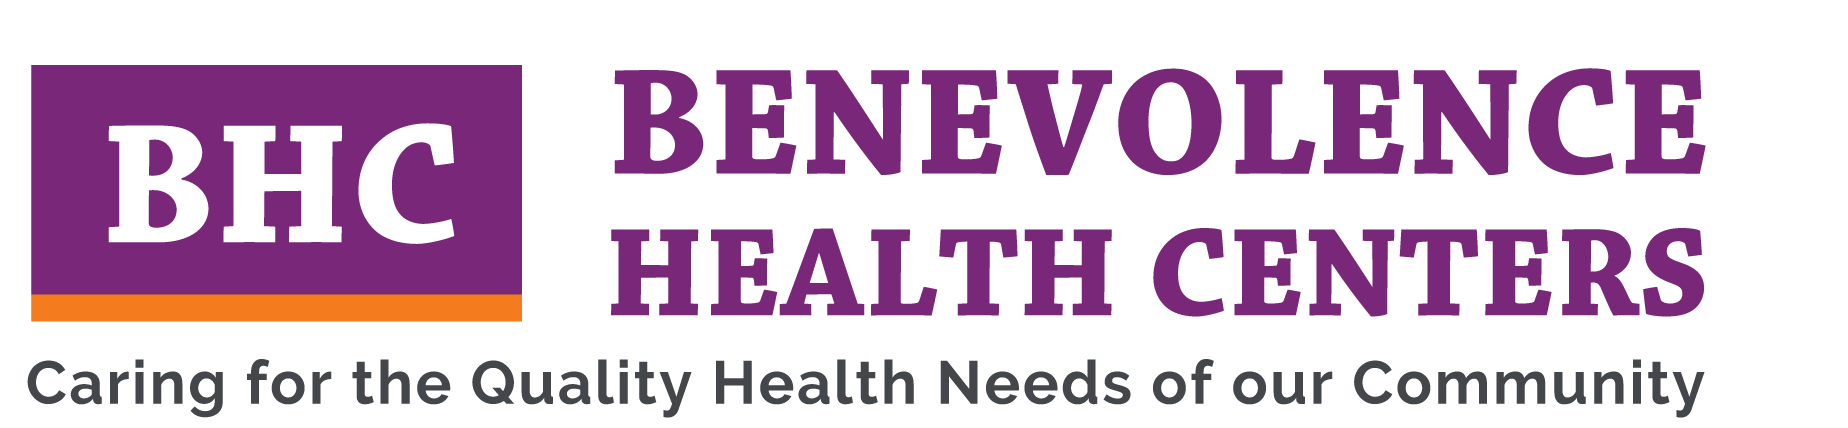 Benevolence Health Centers